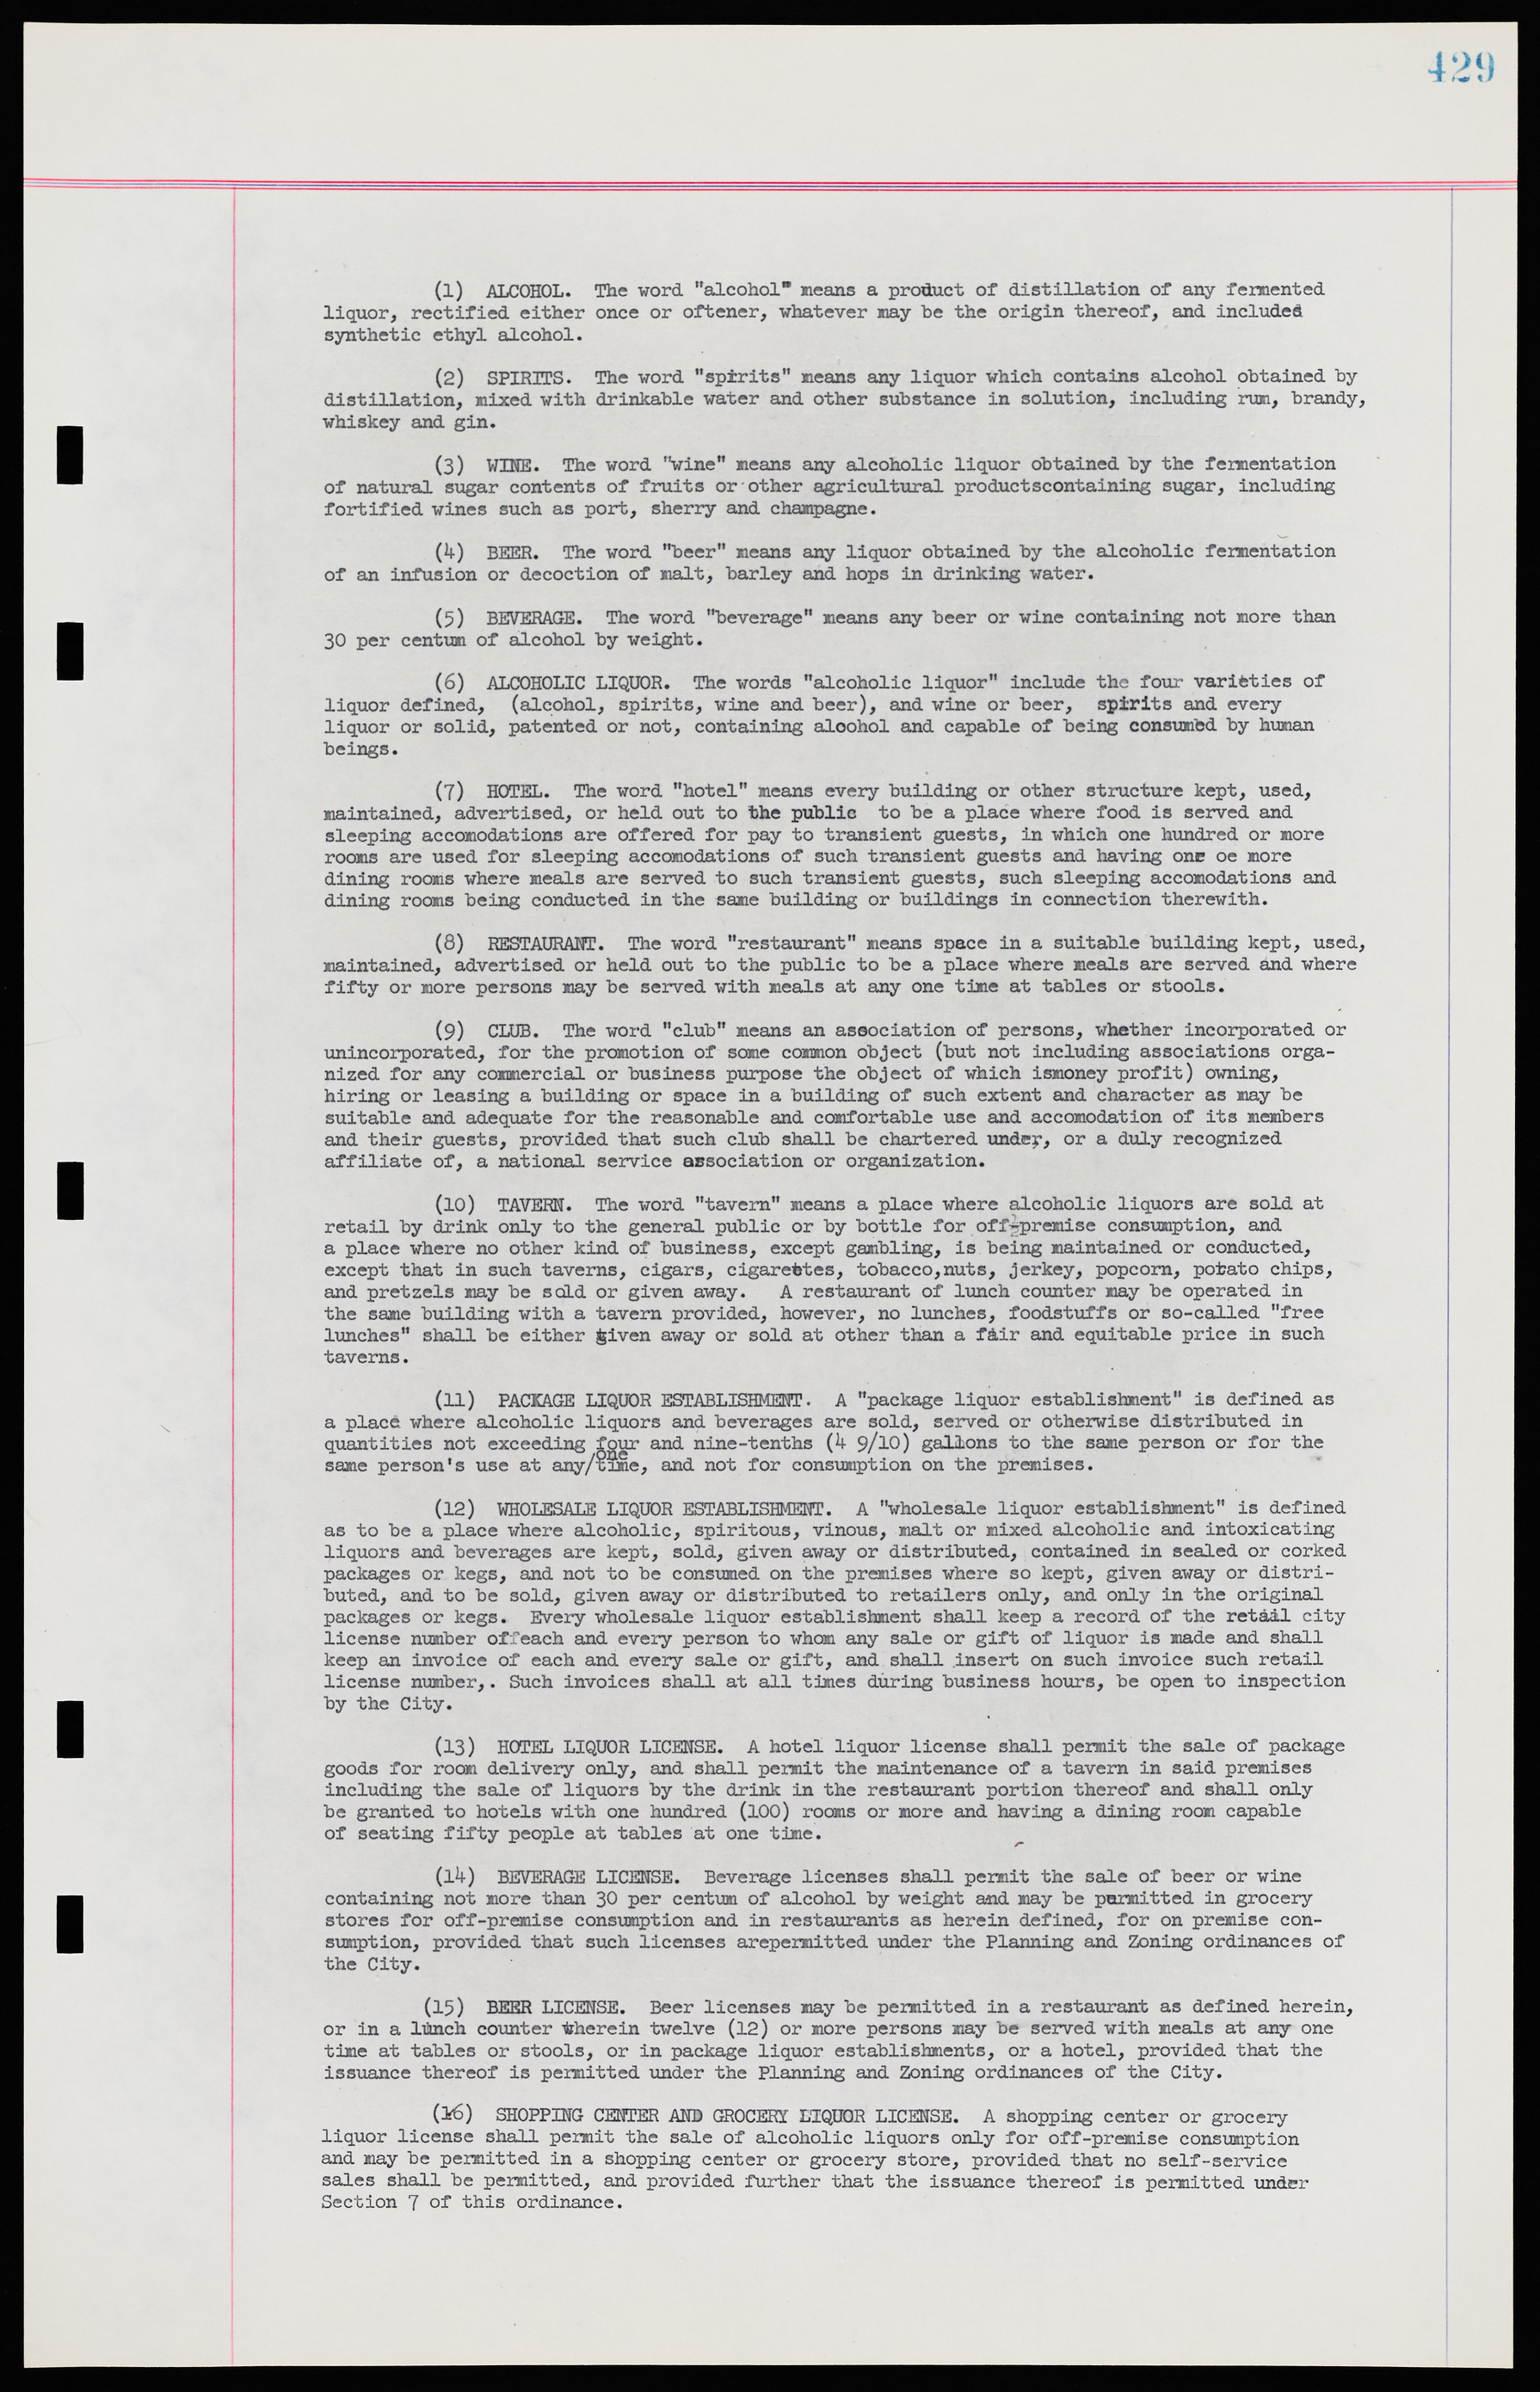 Las Vegas City Ordinances, November 13, 1950 to August 6, 1958, lvc000015-437